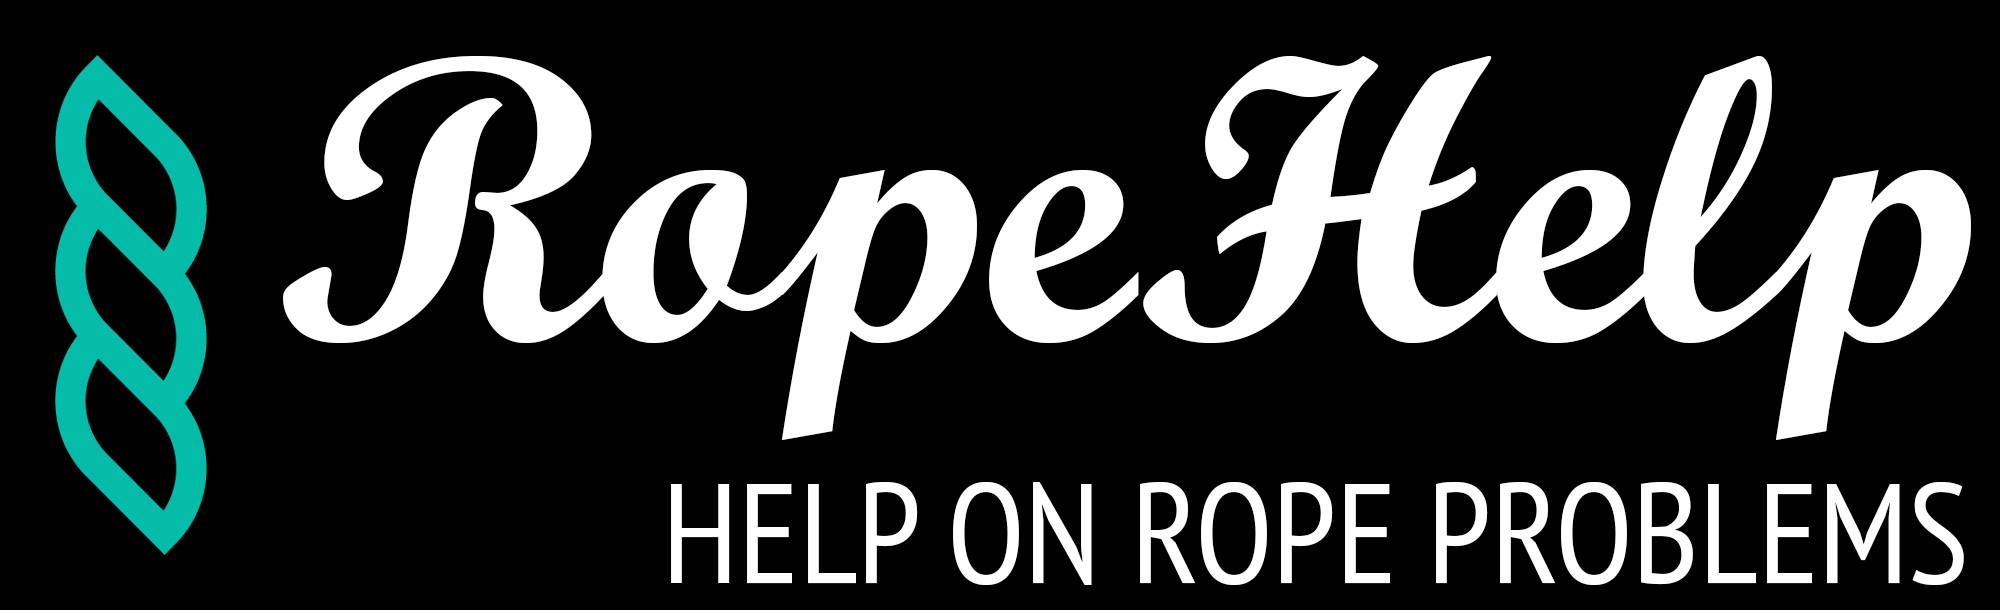 Member of Ropehelp